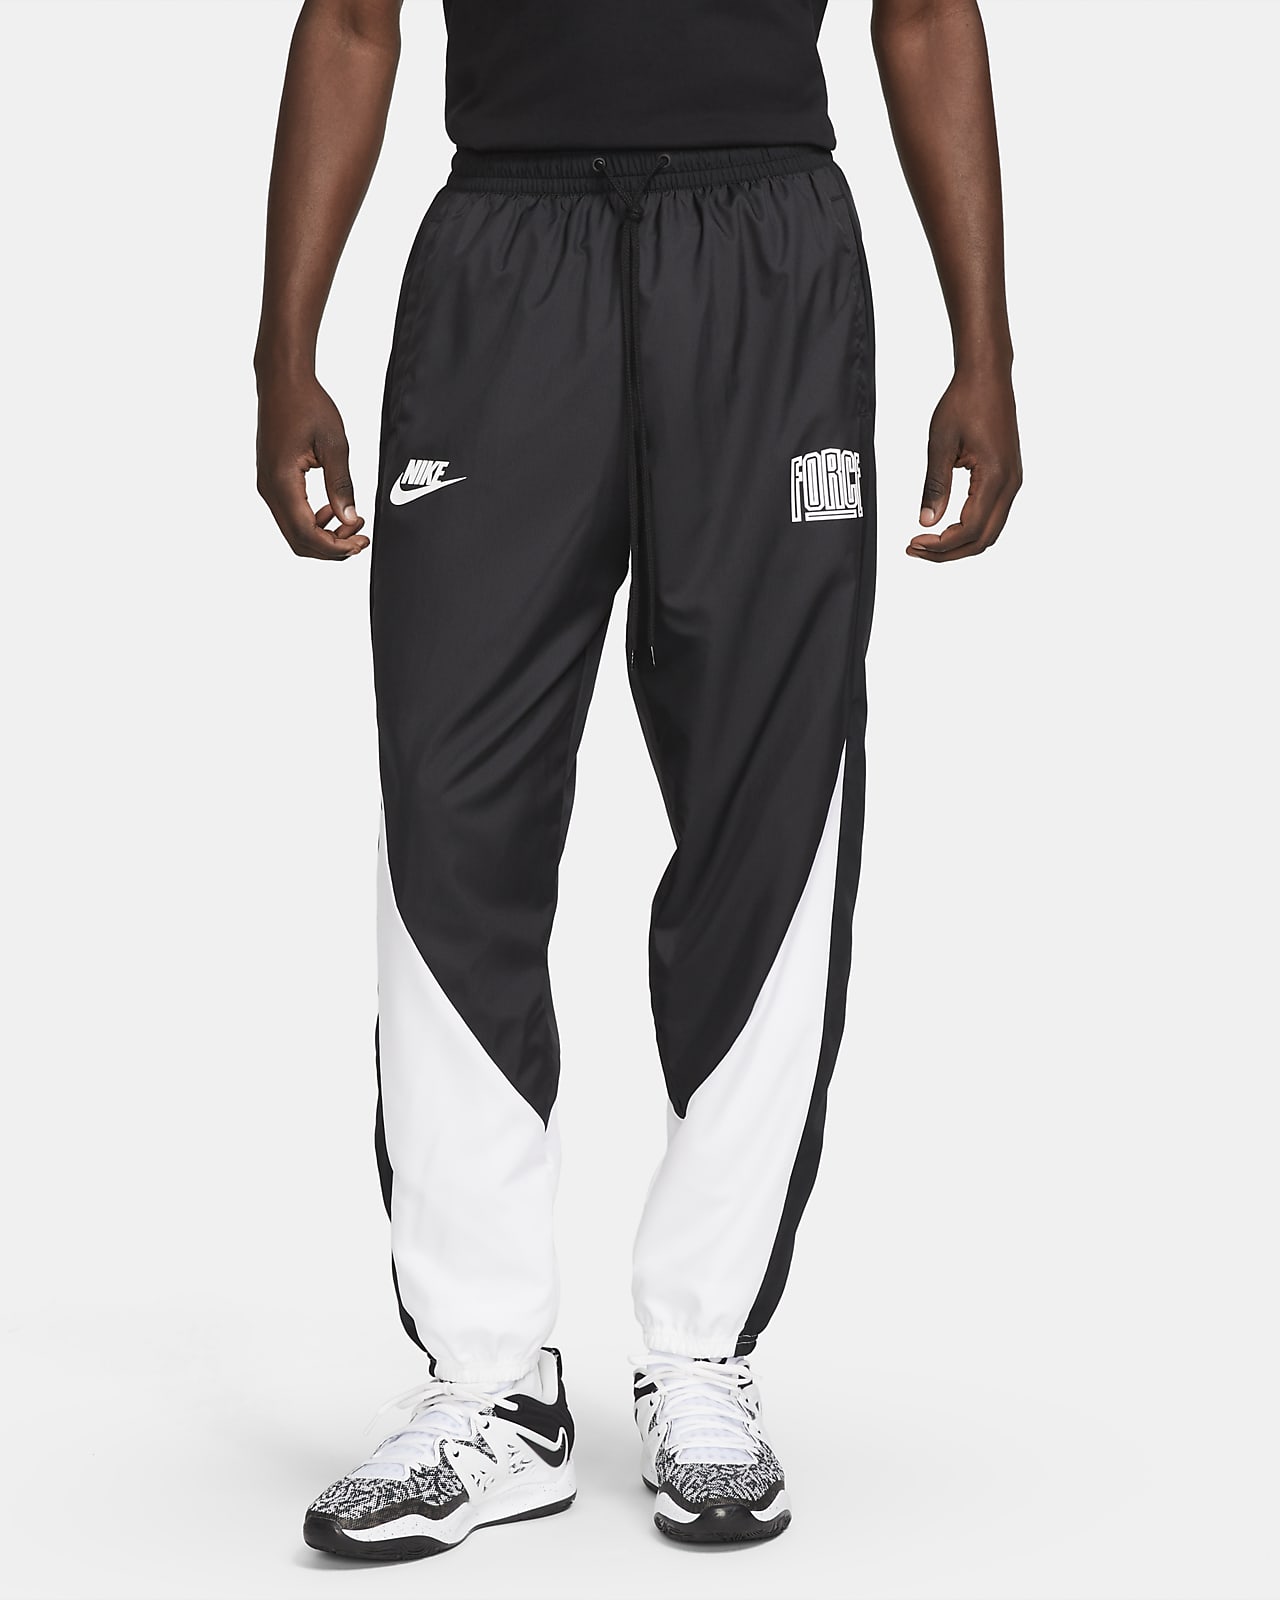 Nike Starting 5 Pantalons de bàsquet - Home